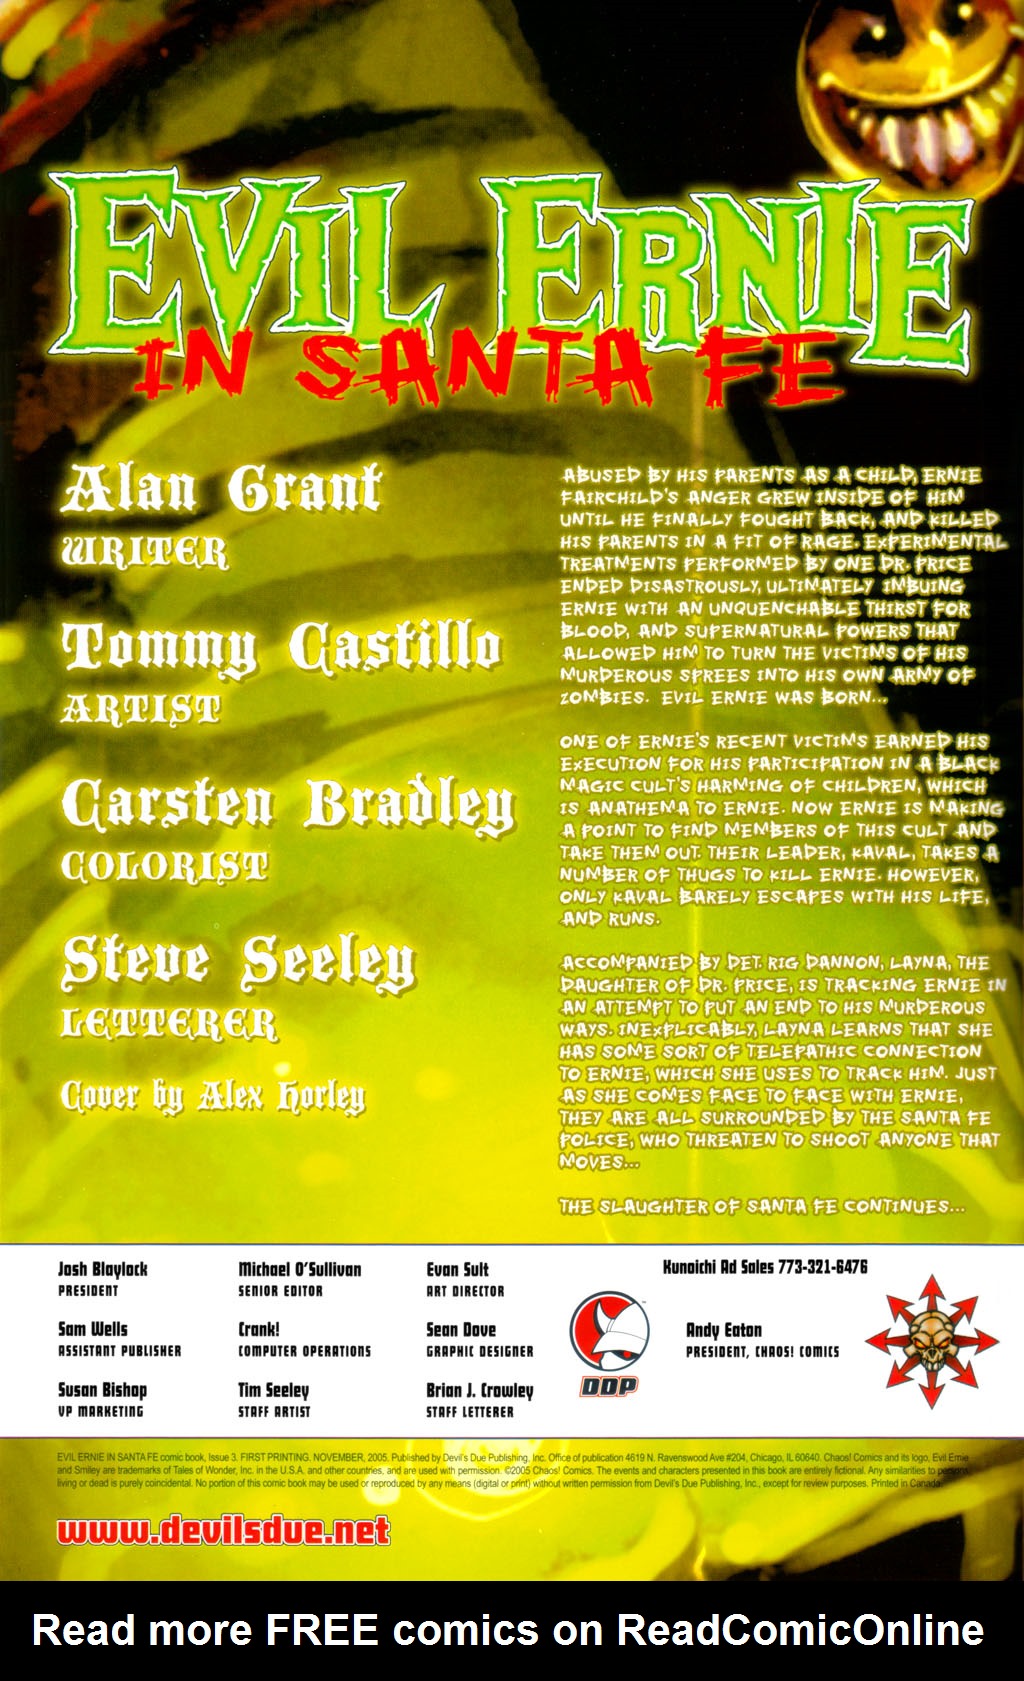 Read online Evil Ernie in Santa Fe comic -  Issue #3 - 2